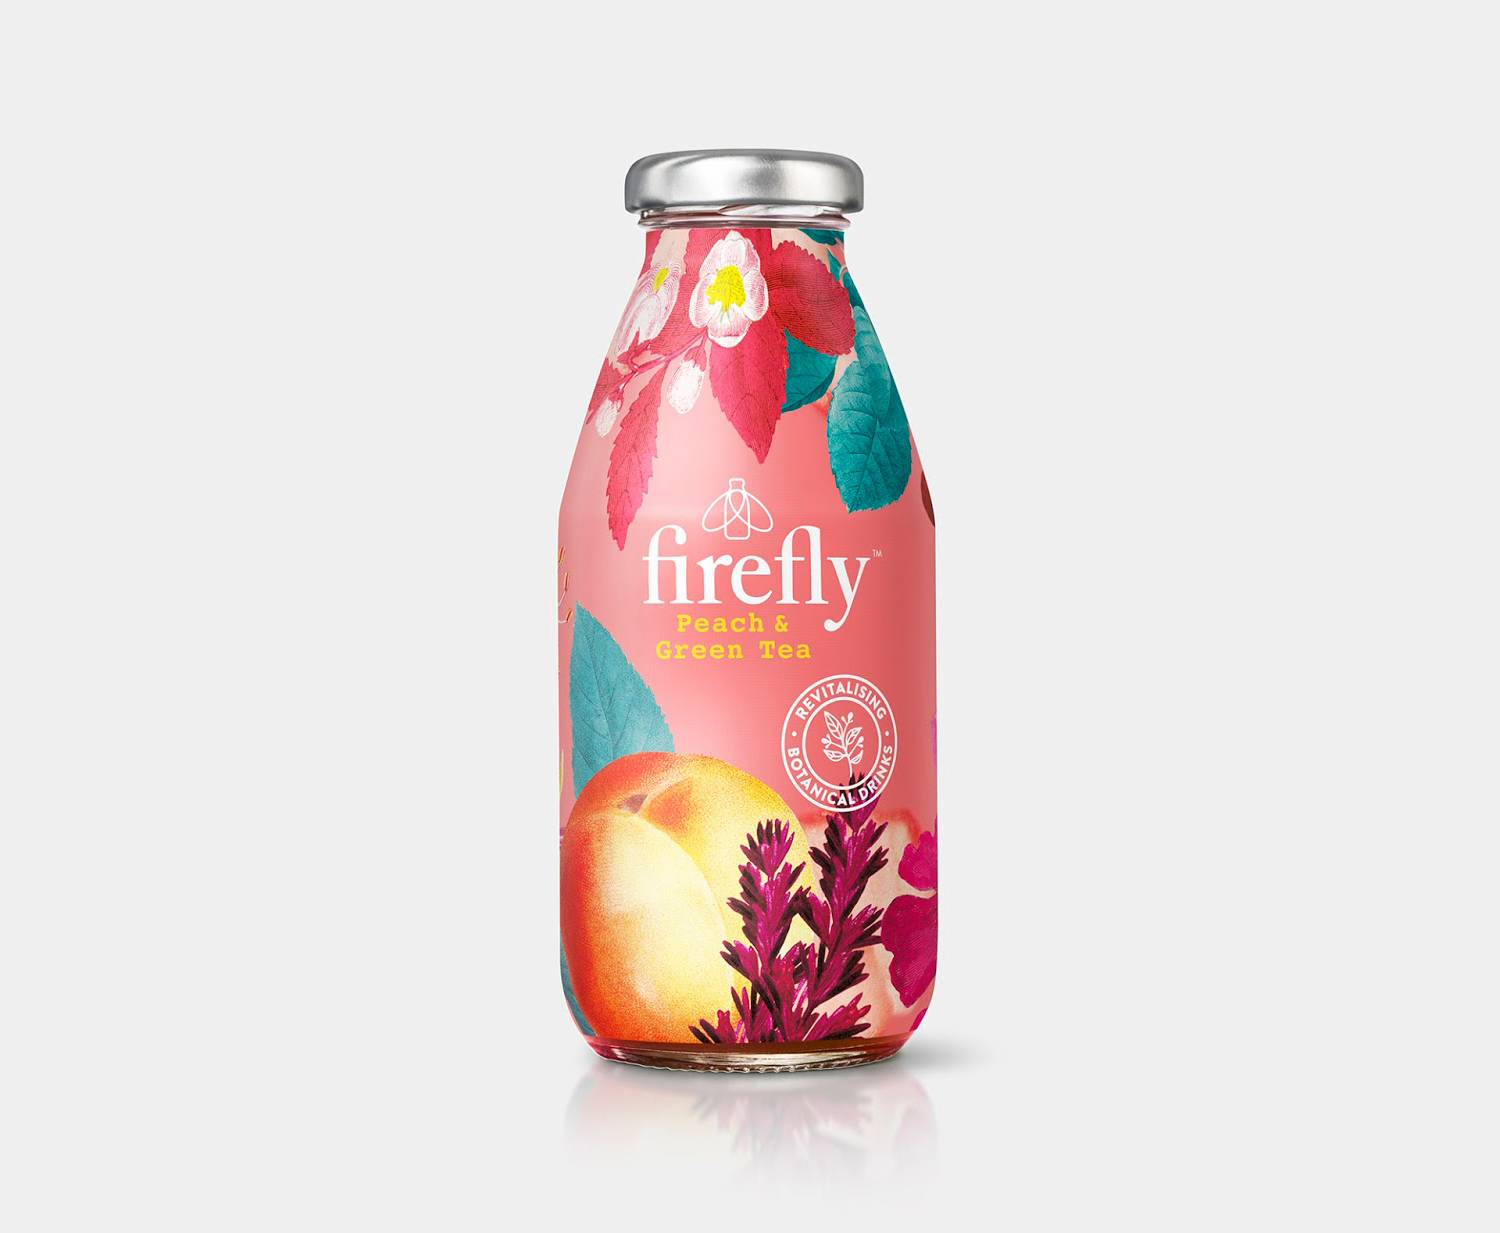 Packaging design by B&B Studio for Firefly